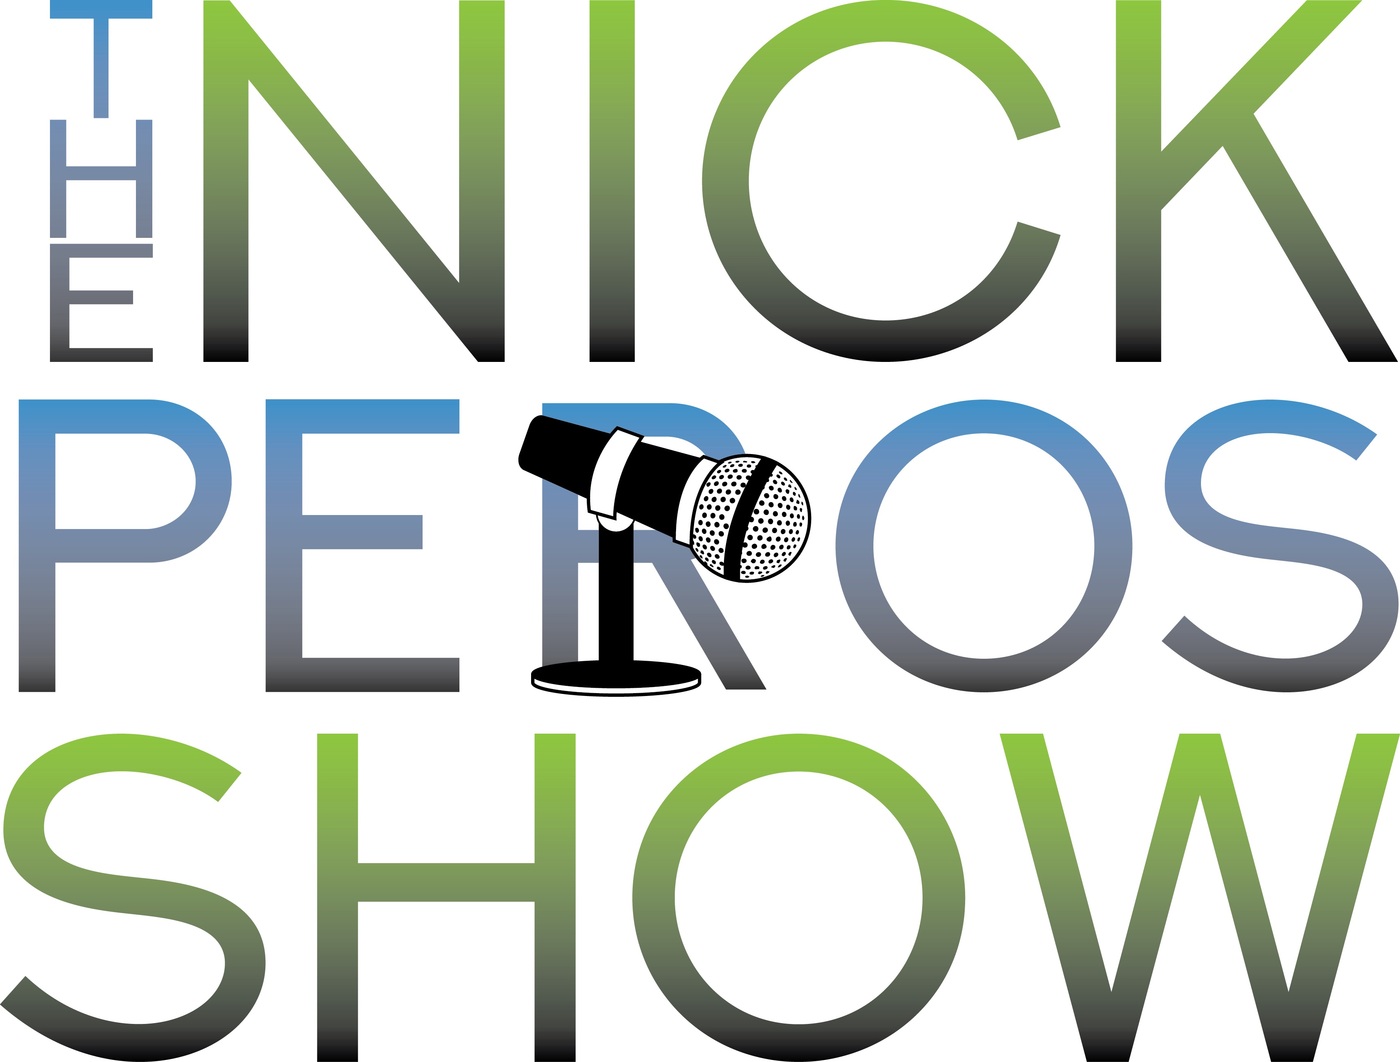 The Nick Peros Show - Episode 34 - The Season's End